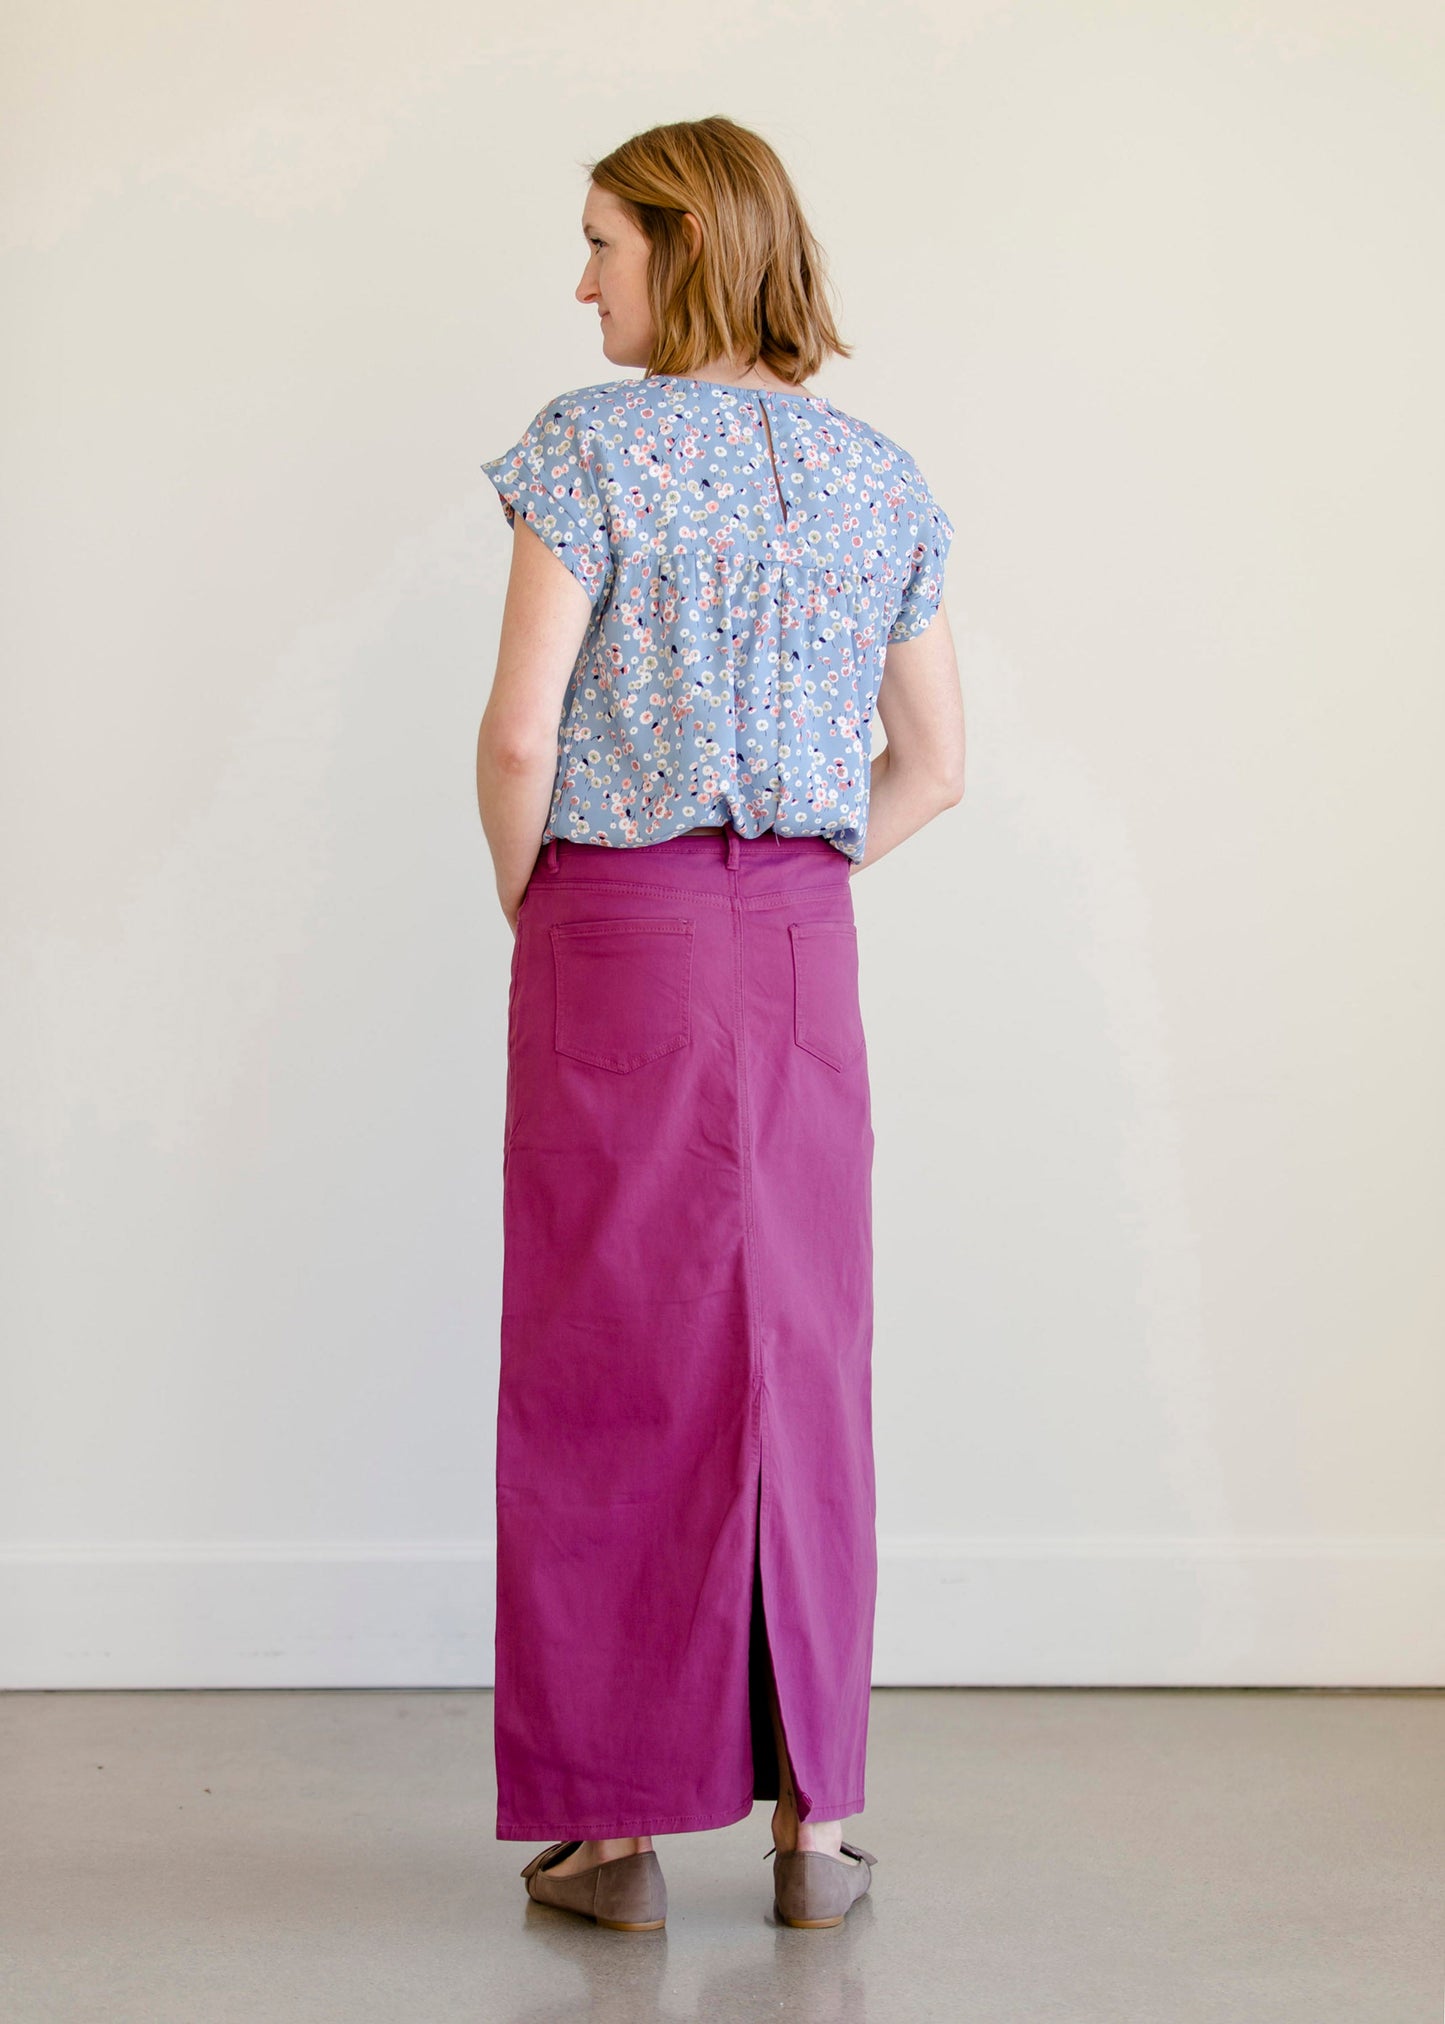 Stella Plum Colored Denim Skirt - FINAL SALE IC Skirts